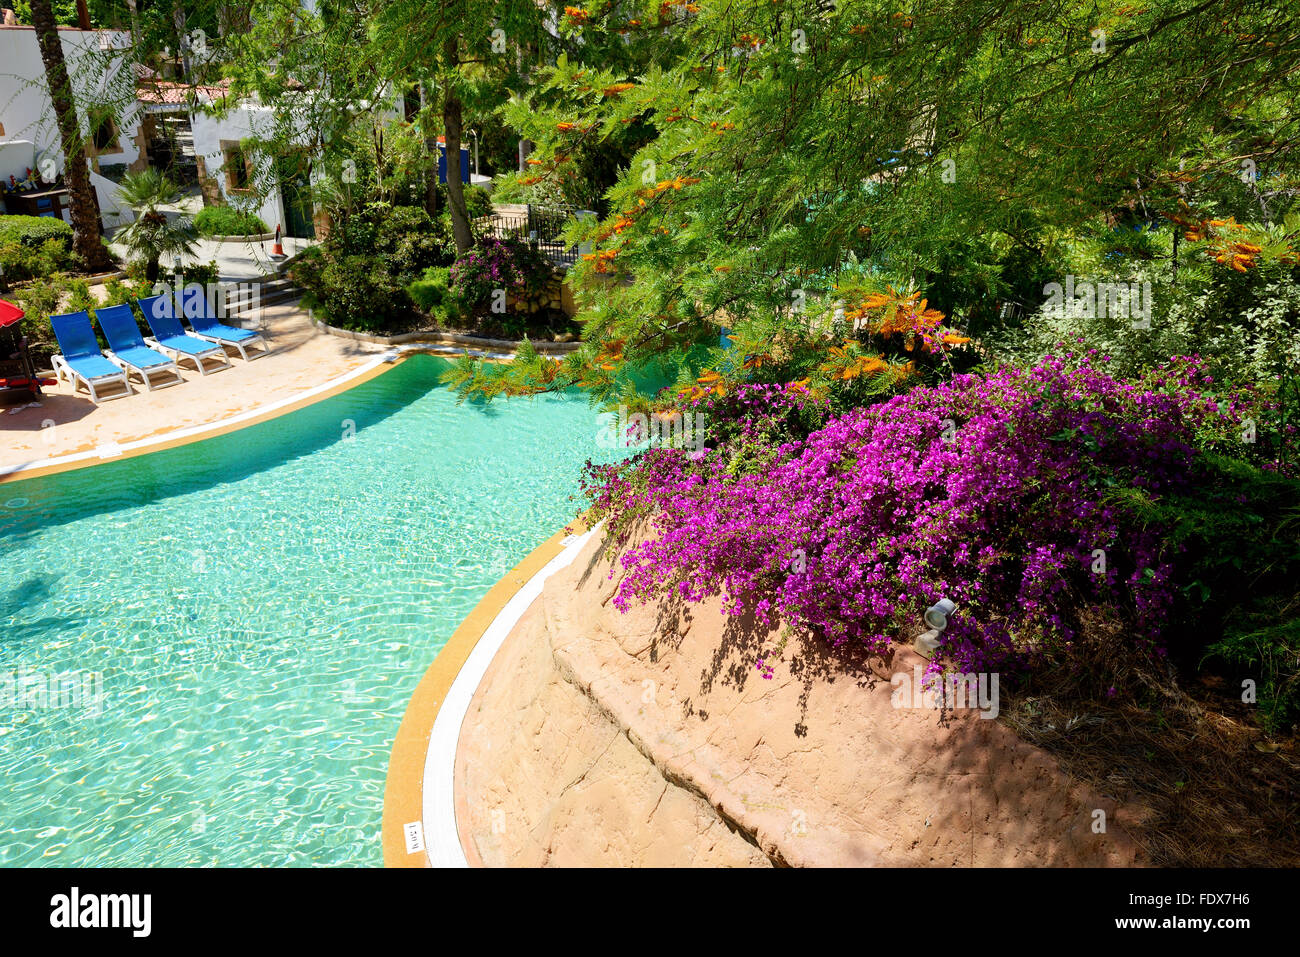 La piscine de l'hôtel de luxe, Costa Dorada, Espagne Banque D'Images